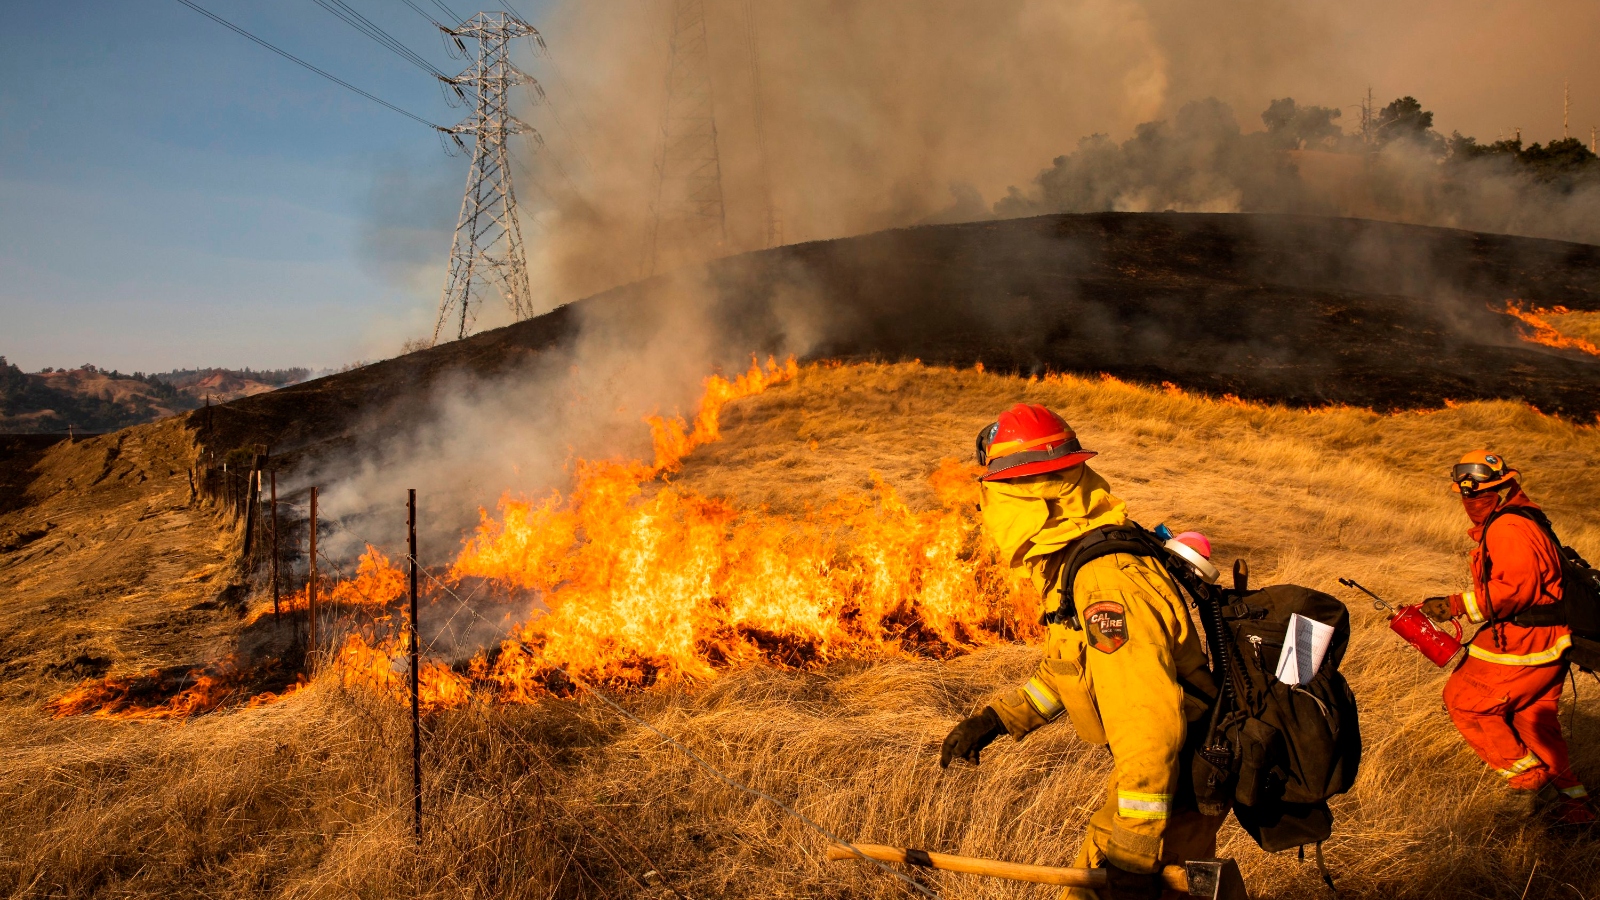 A back fire set by fire fighters burns a hillside near PG&E power lines during the 2019 Kincade Fire in Healdsburg, California.